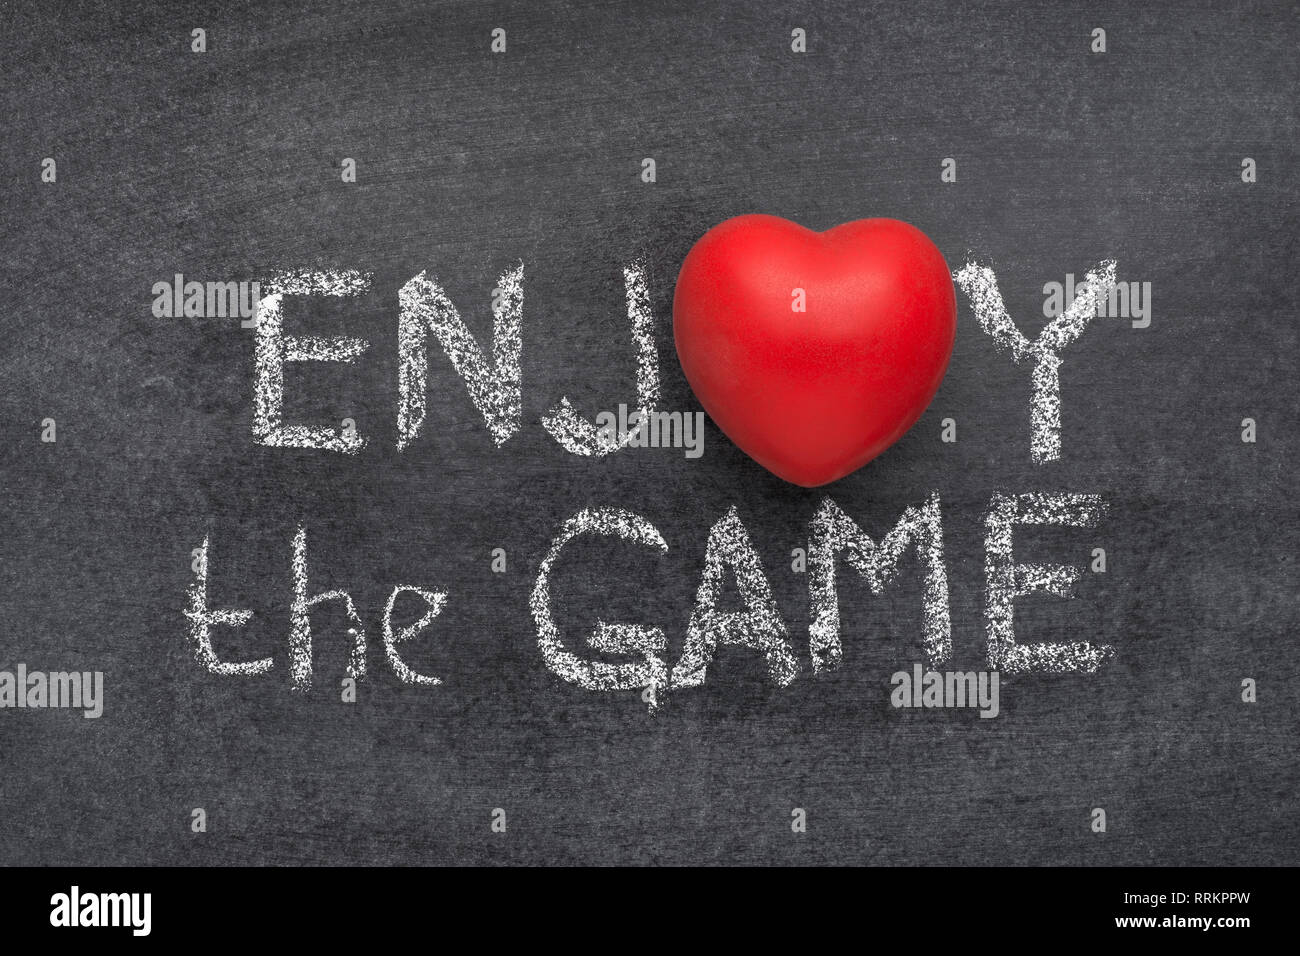 enjoy the game phrase handwritten on blackboard with heart symbol instead of O Stock Photo